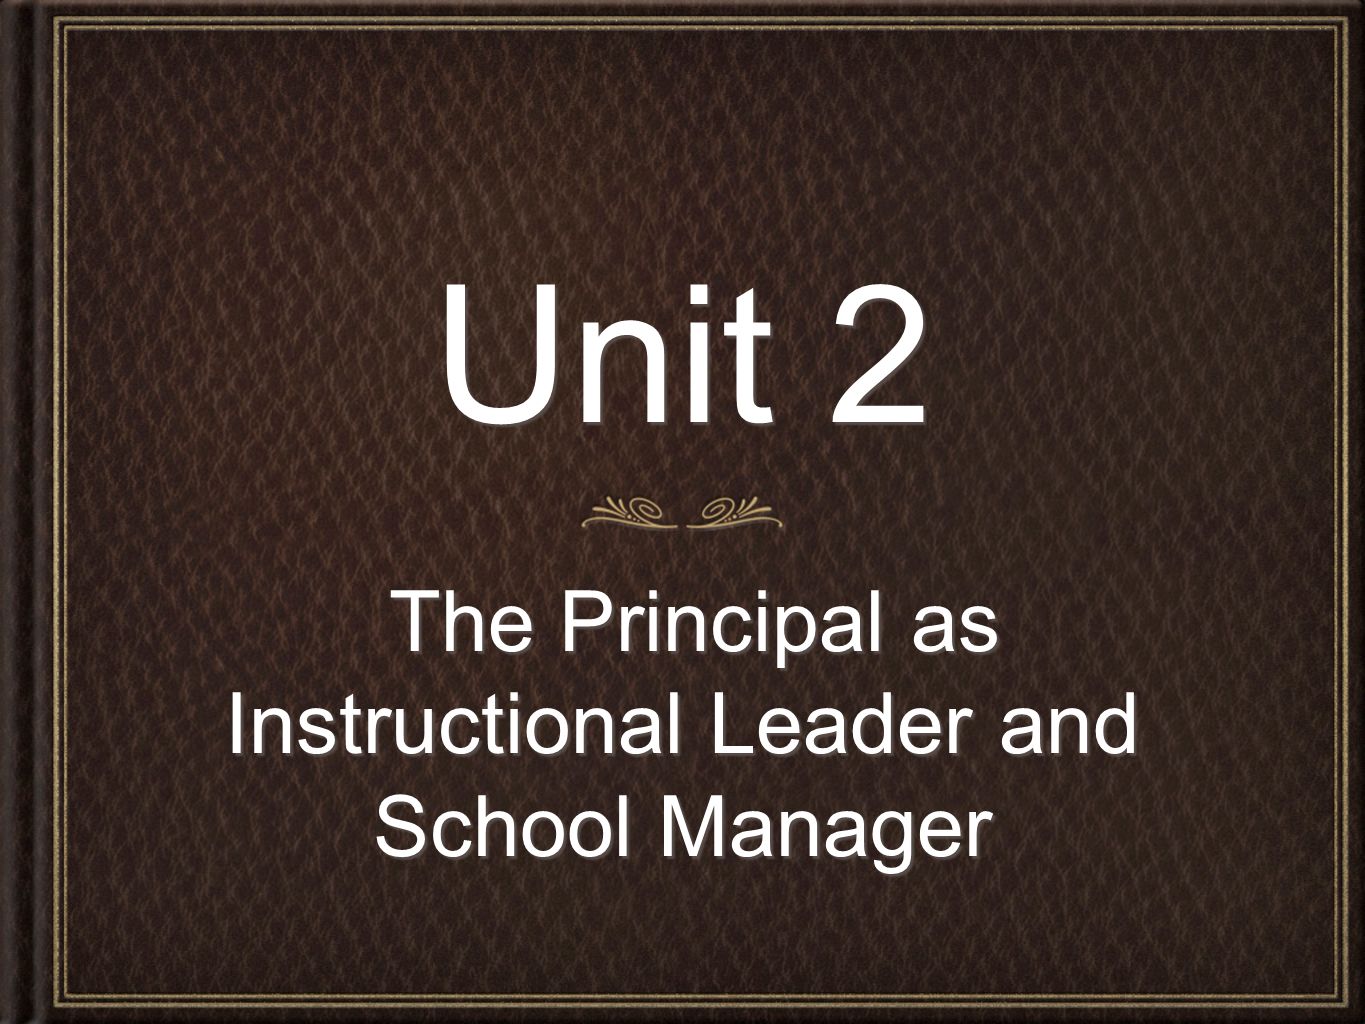 PPT - Superintendent's Teacher Leader Academy PowerPoint